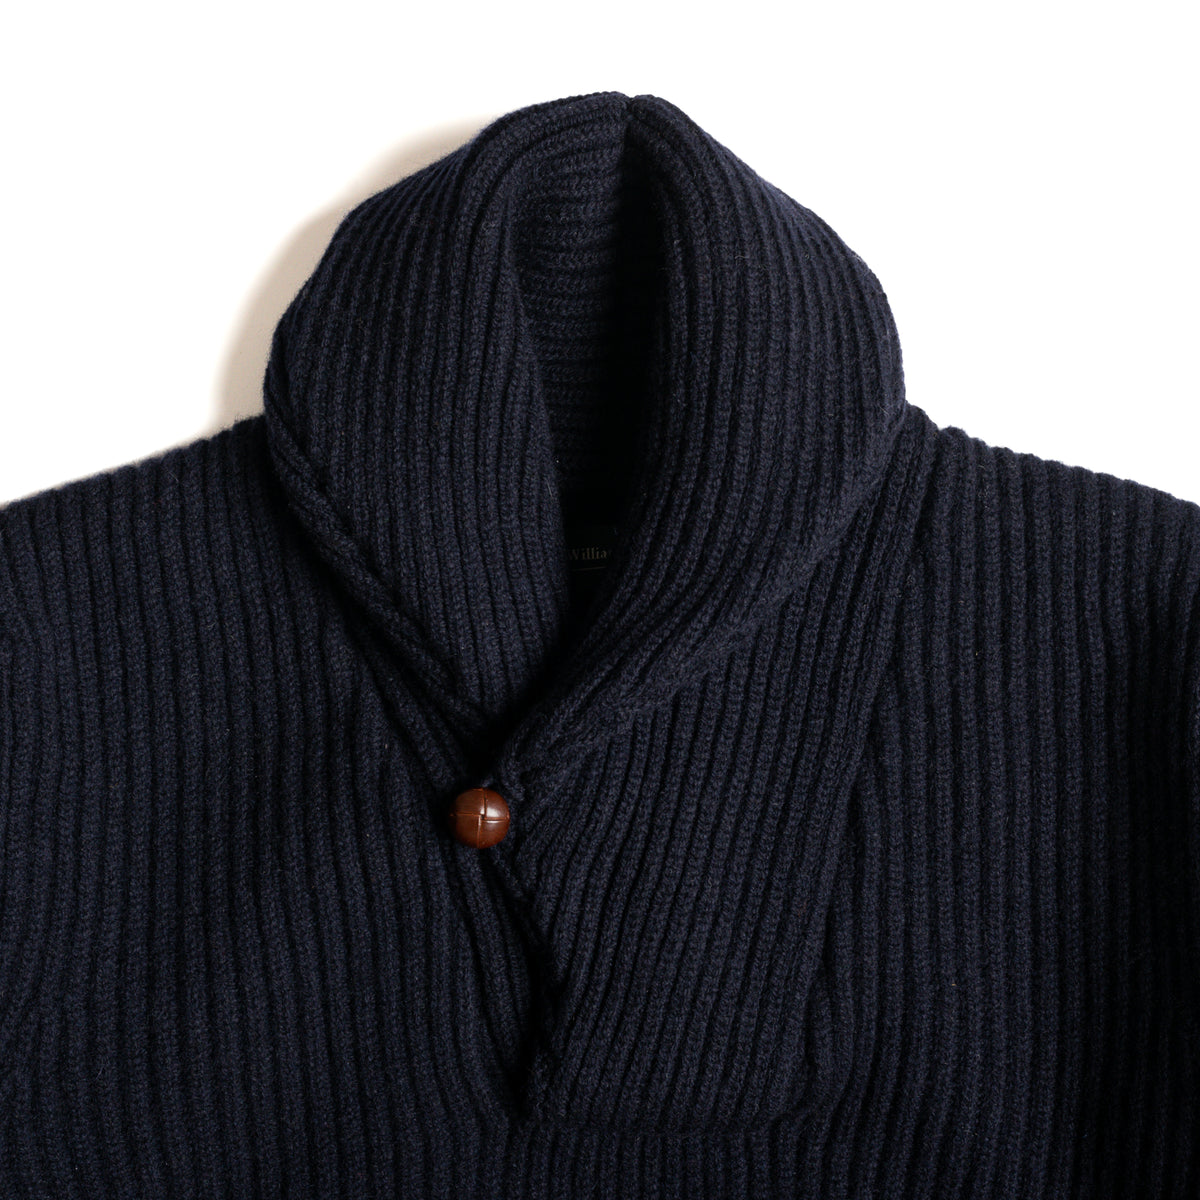 Navy Lambswool Shawl Collar Sweater